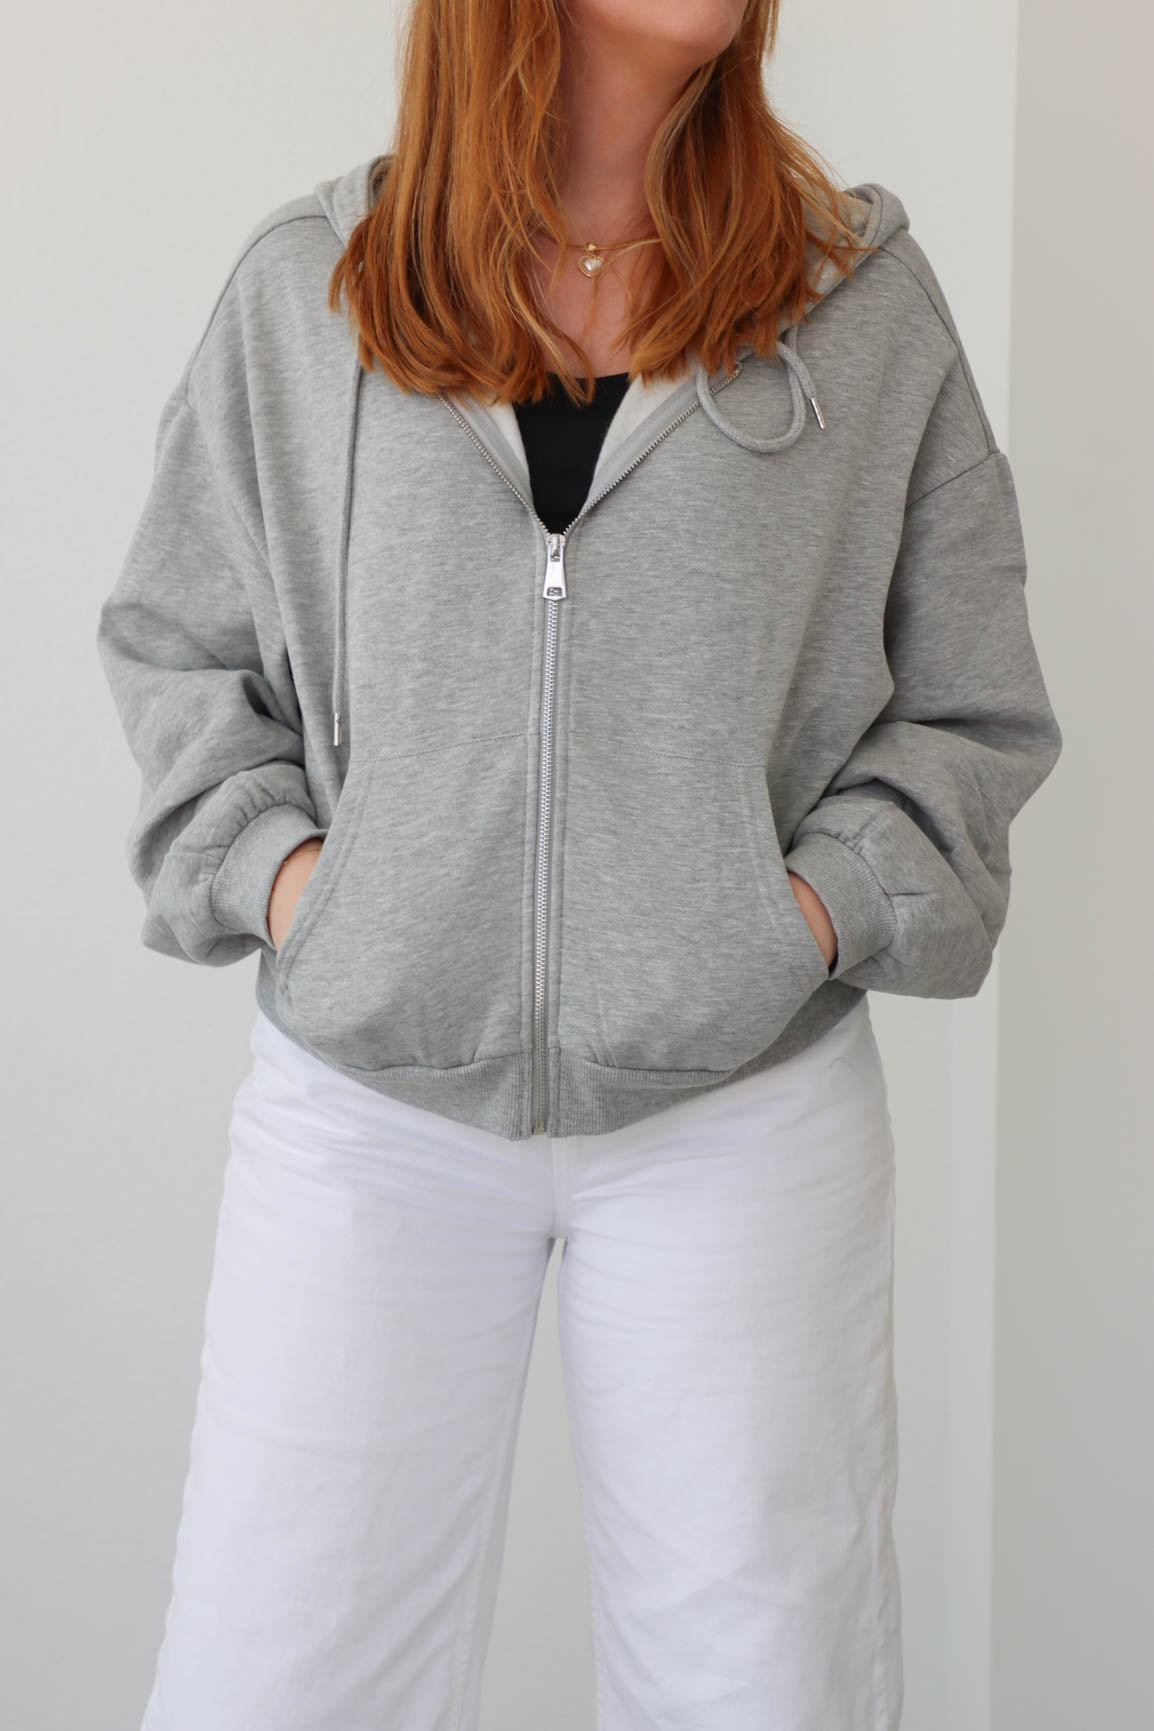 girl wearing light gray hoodie